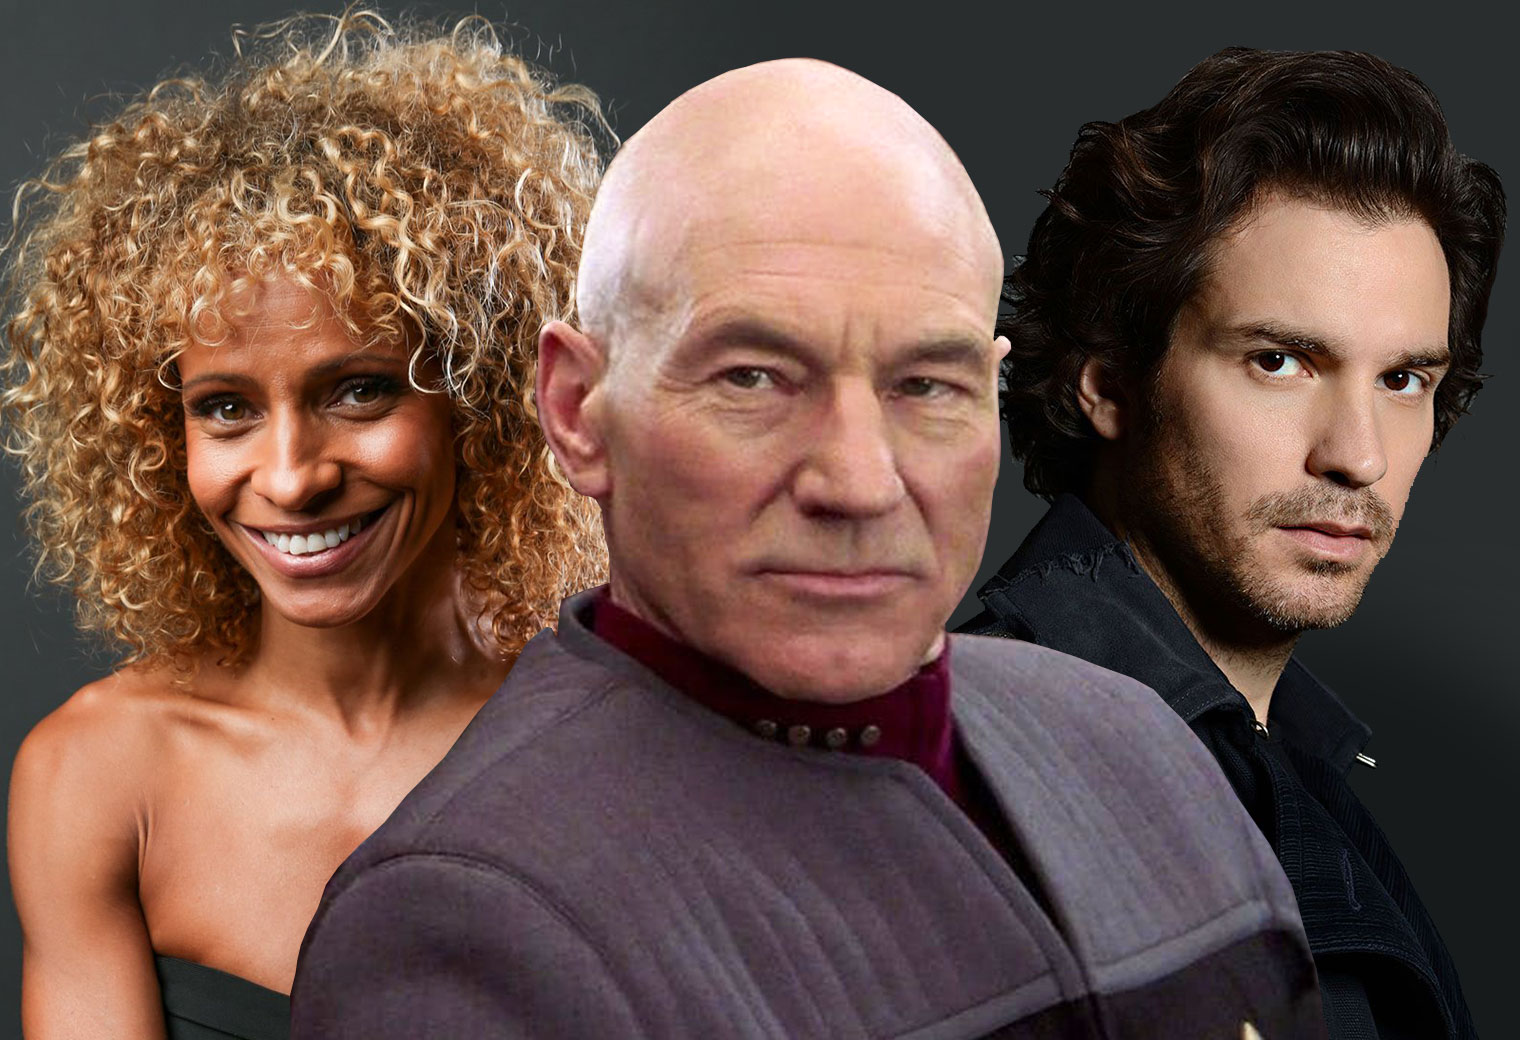 Star Trek "Picard" Series Adds Co-Stars Santiago Cabrera and Michelle Hurd